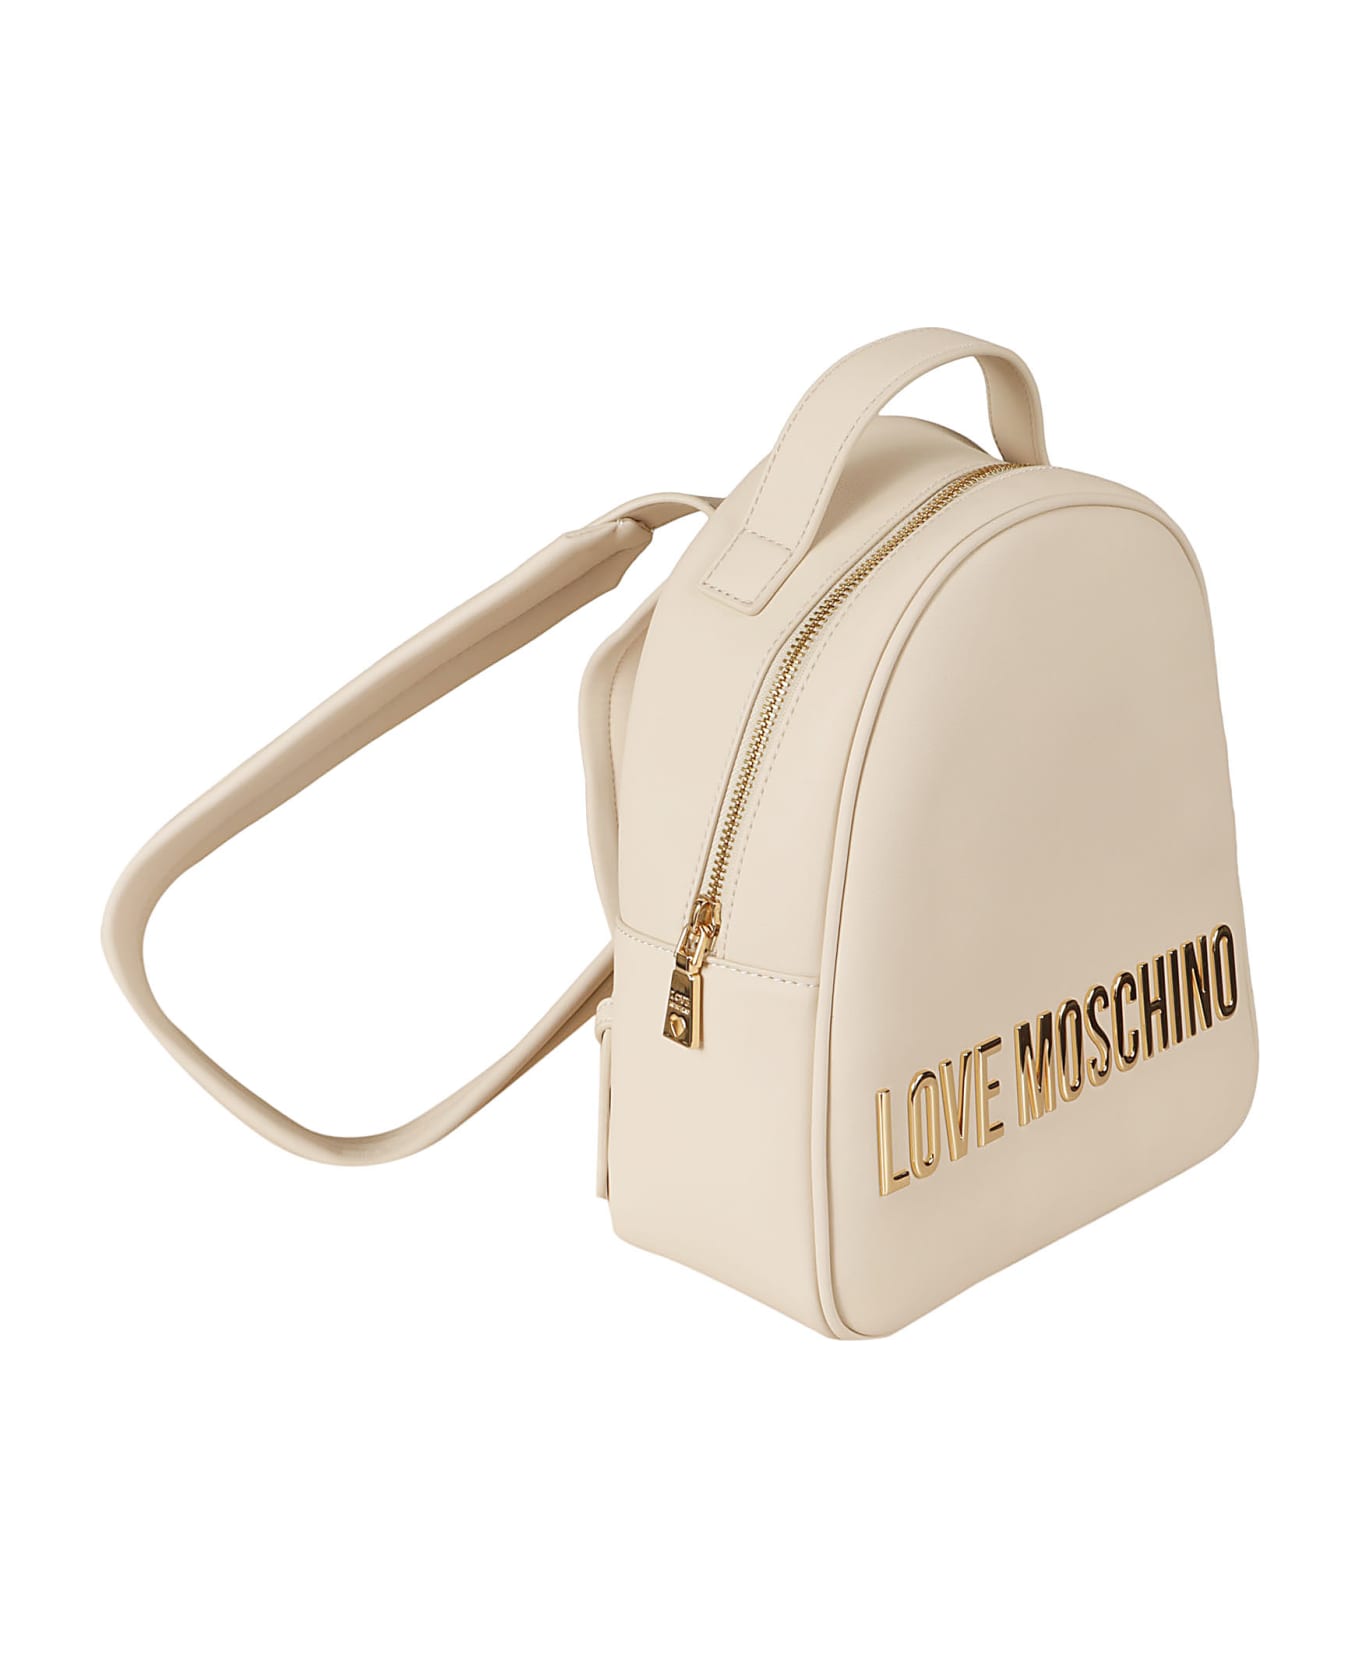 Love Moschino Logo Plaque Embossed Backpack - Avorio バックパック